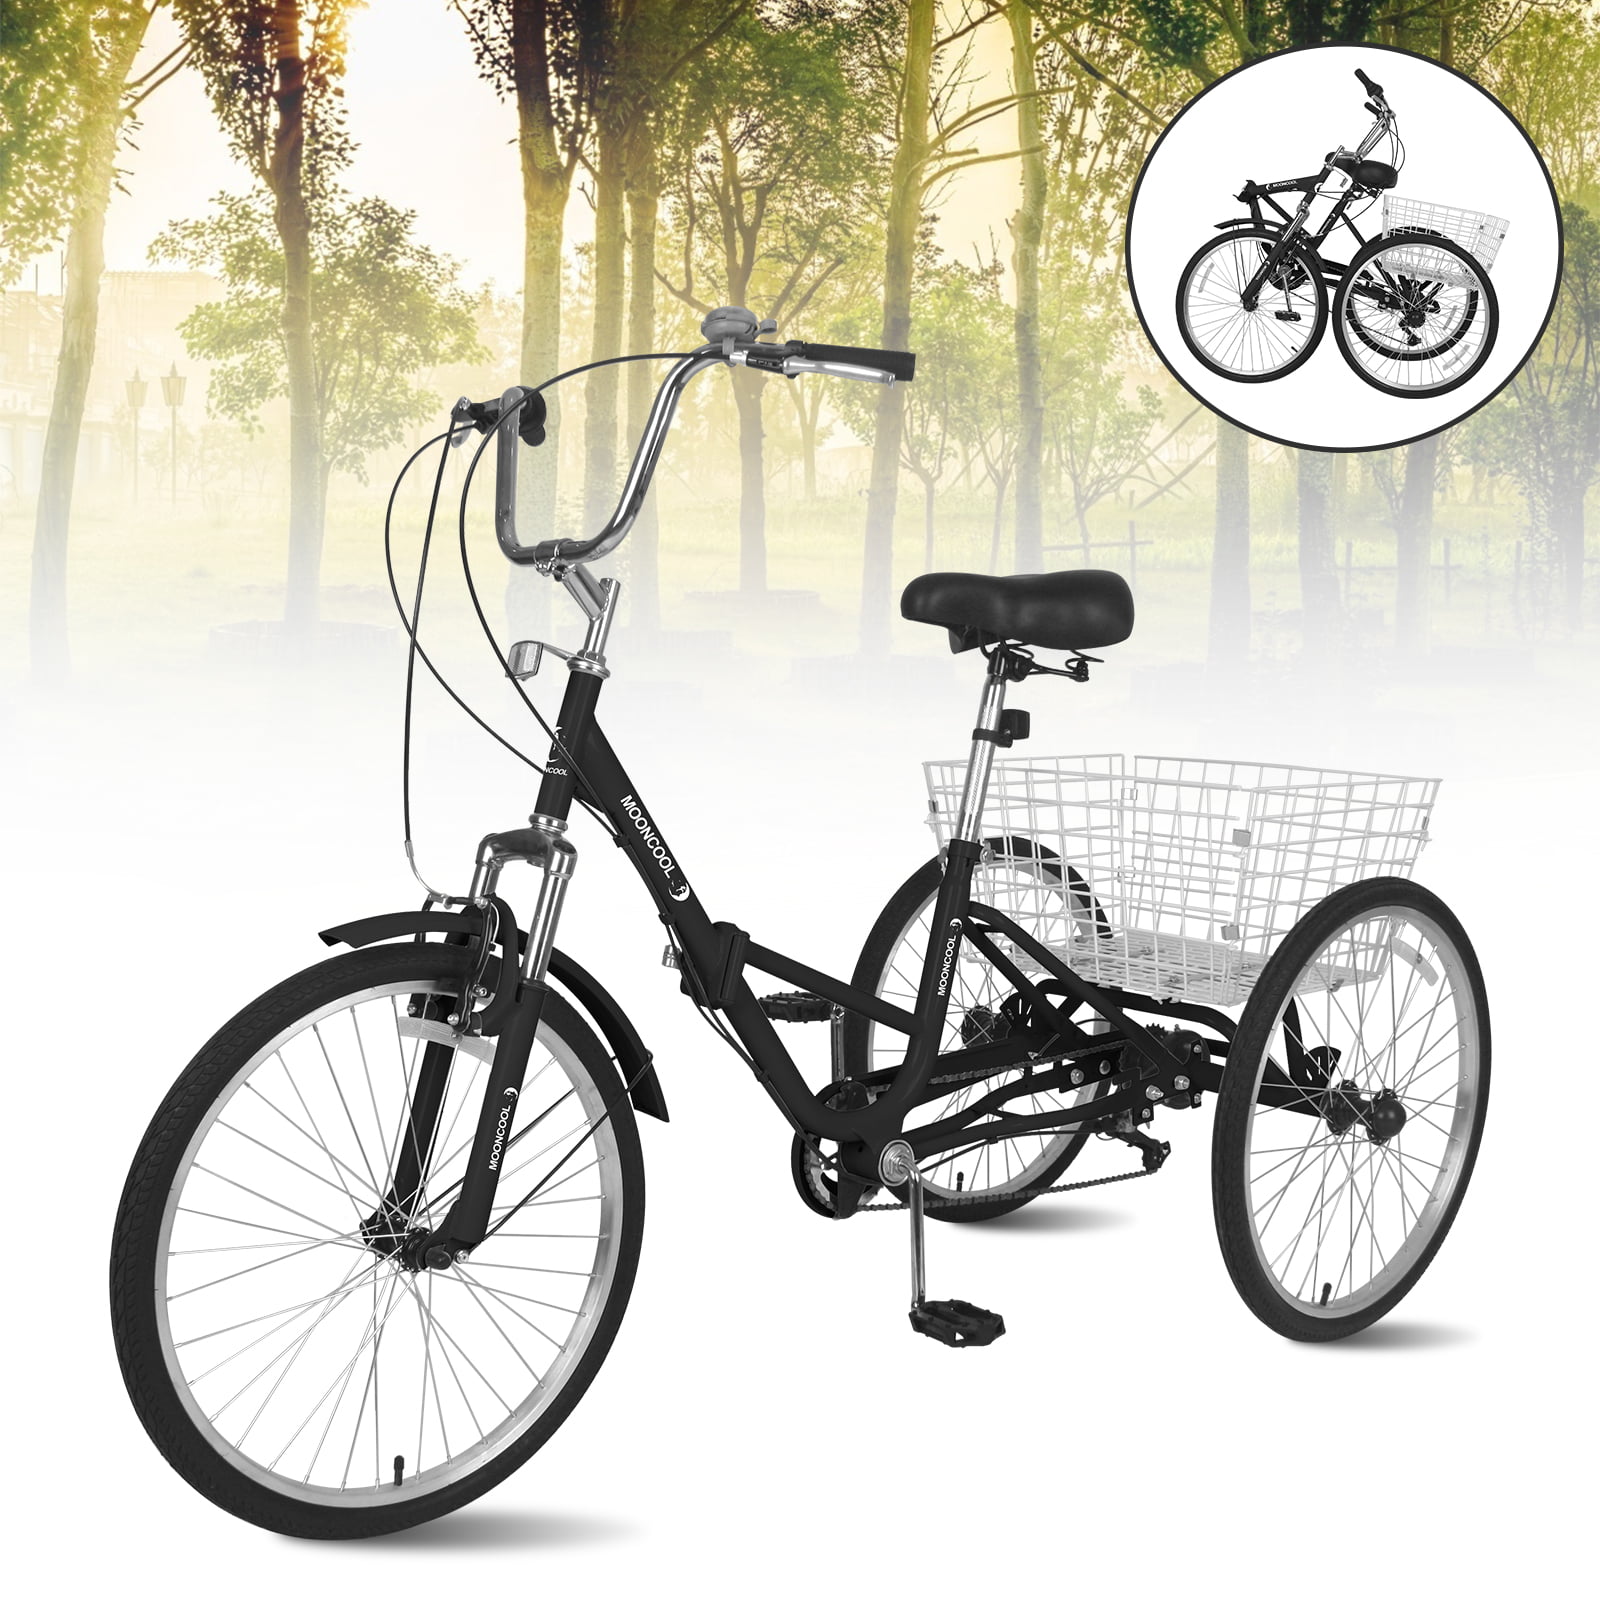 Ridgeyard 7 Speed 24" 3-Wheel Adult Tricycle Cruiser Bike Bicycle Basket Black 